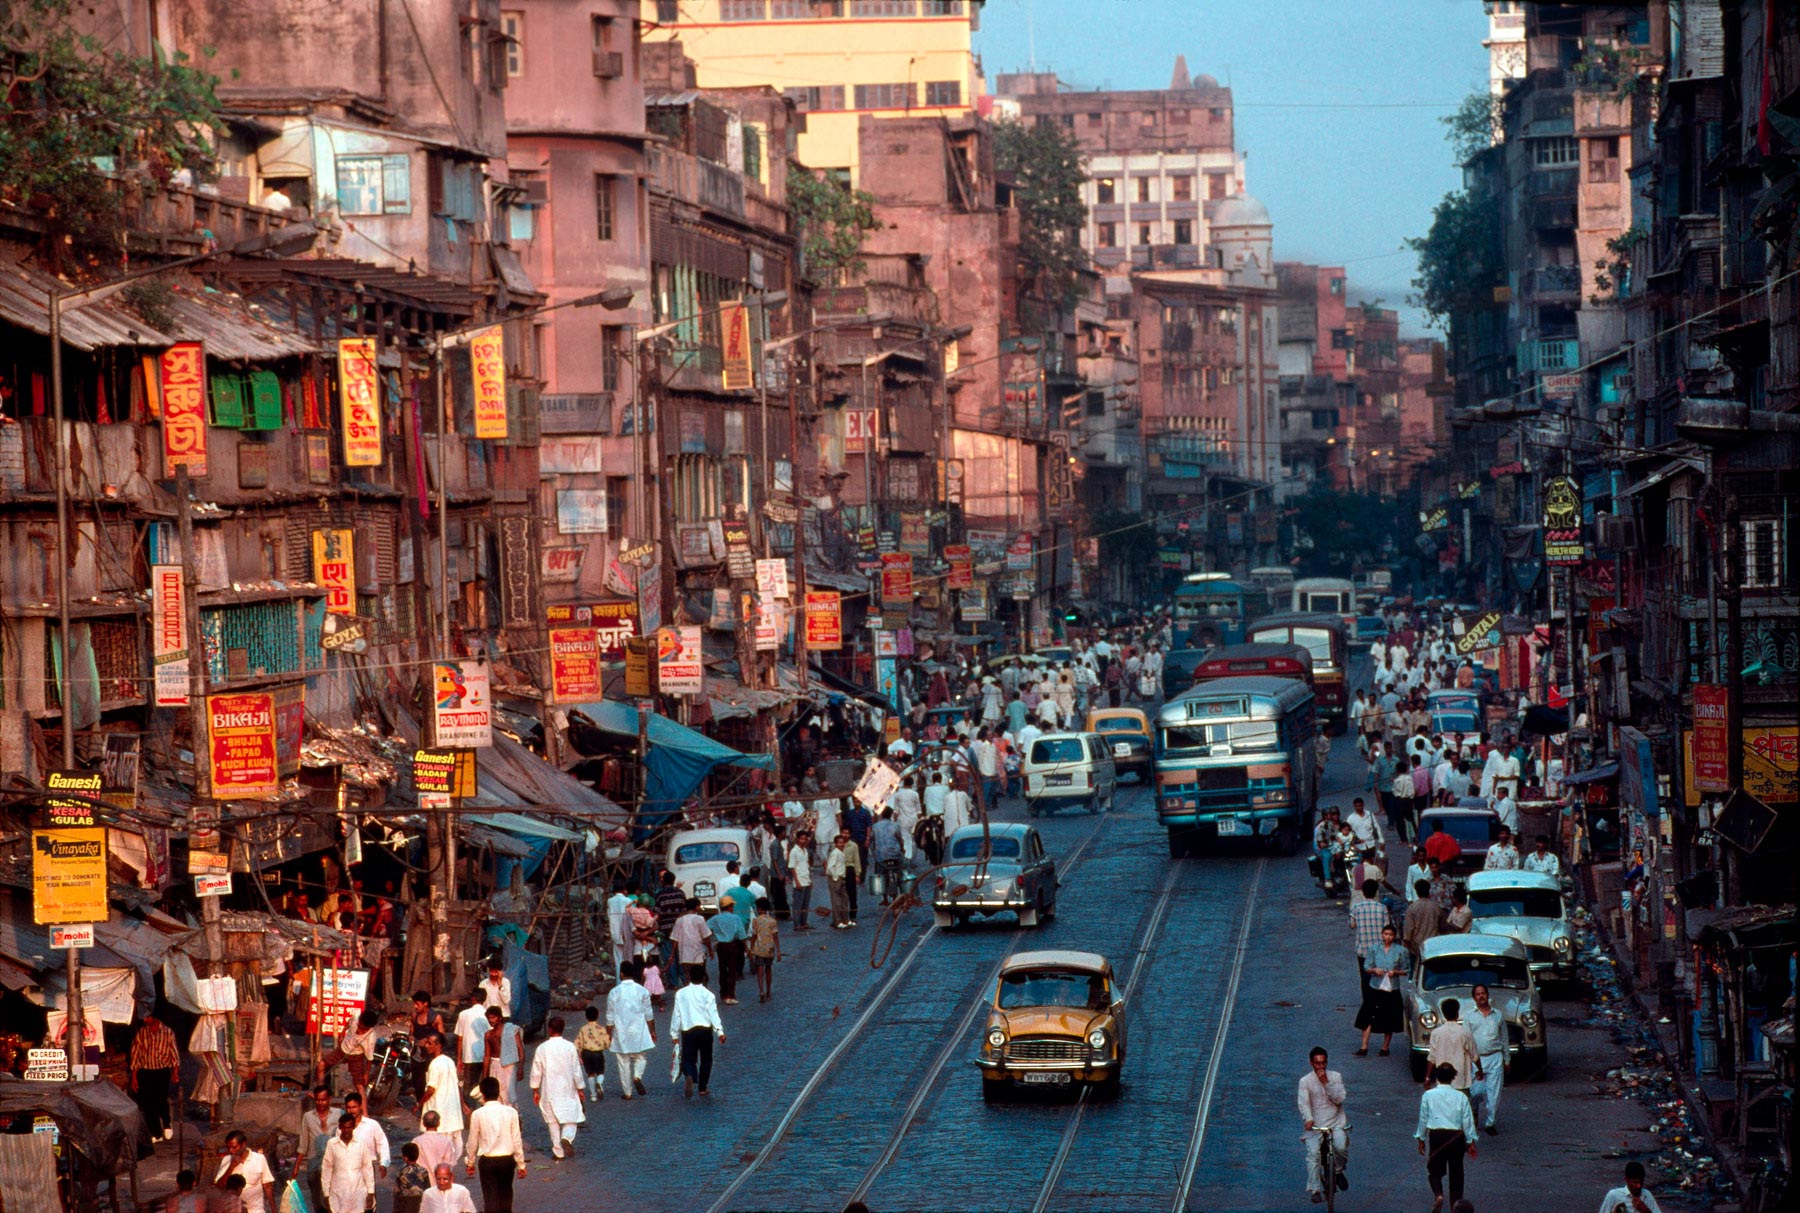 Street scene, Calcutta, India, 1996